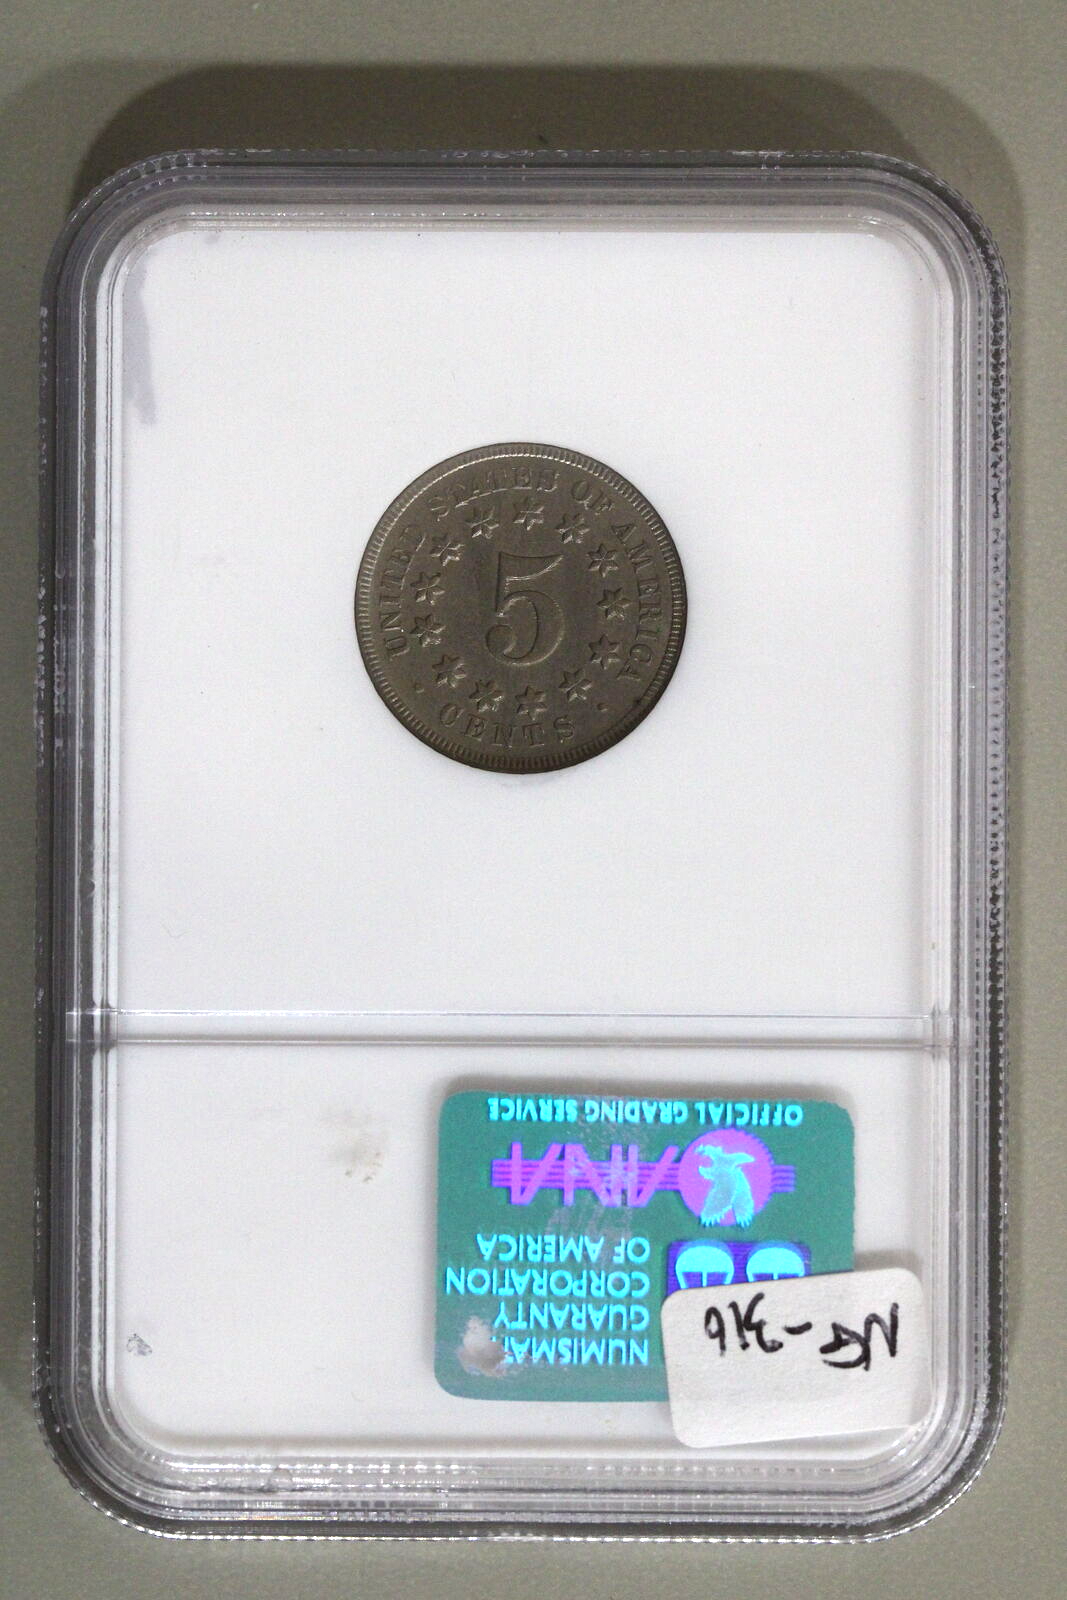 1868 (AU58) Shield Nickel 5c NGC Graded Coin